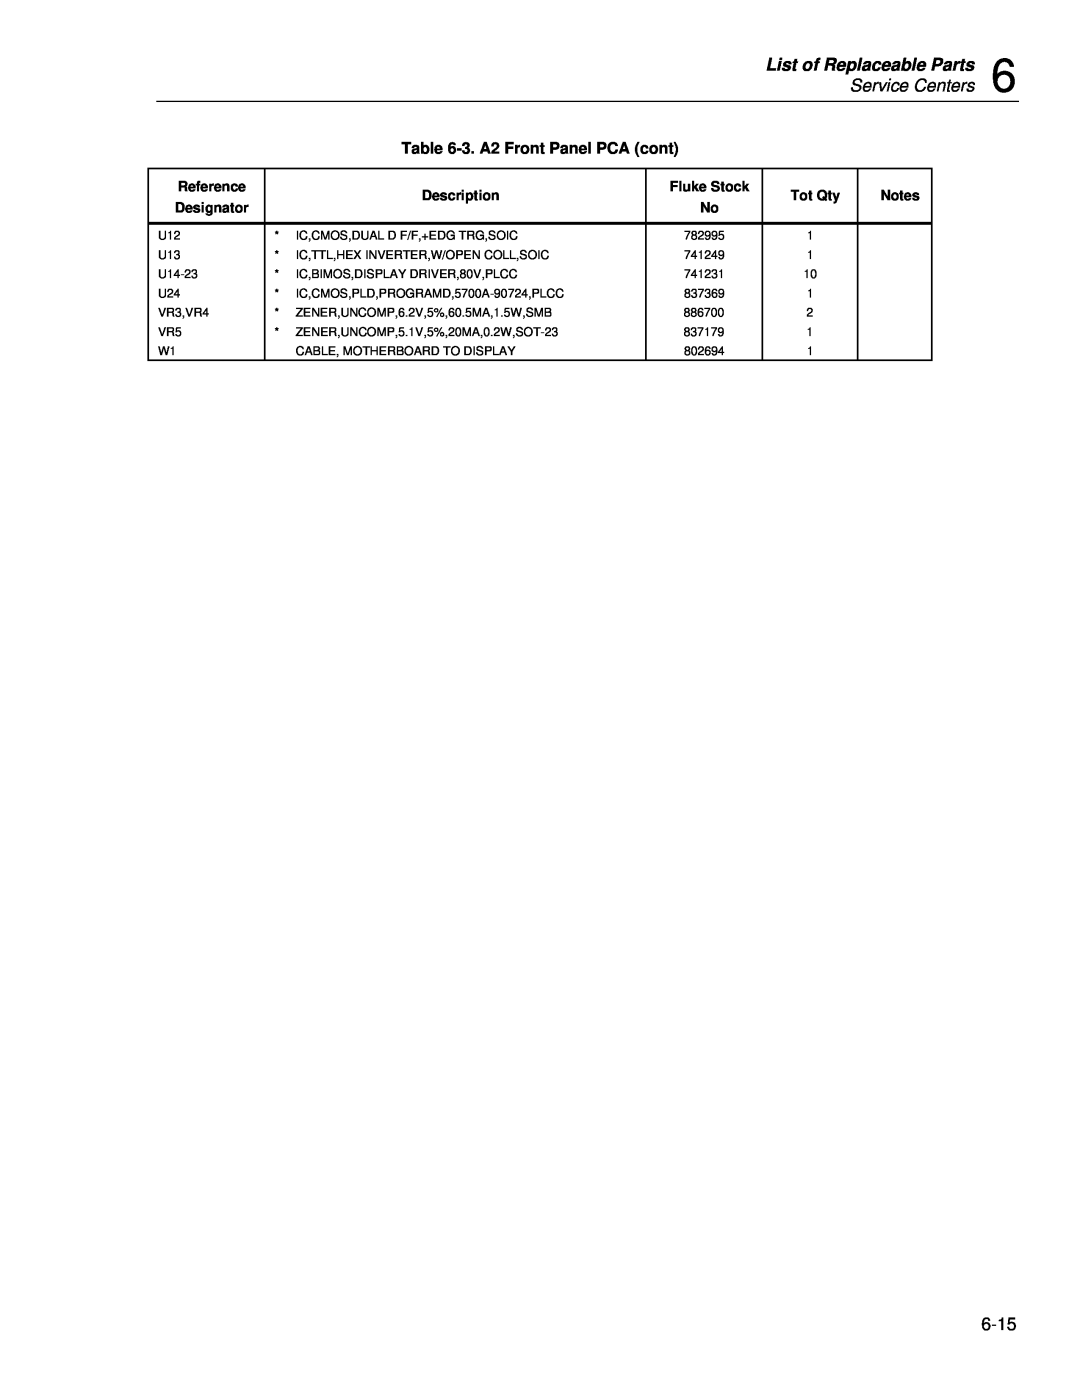 Fluke 5720A service manual List of Replaceable Parts, Service Centers, 3. A2 Front Panel PCA cont 